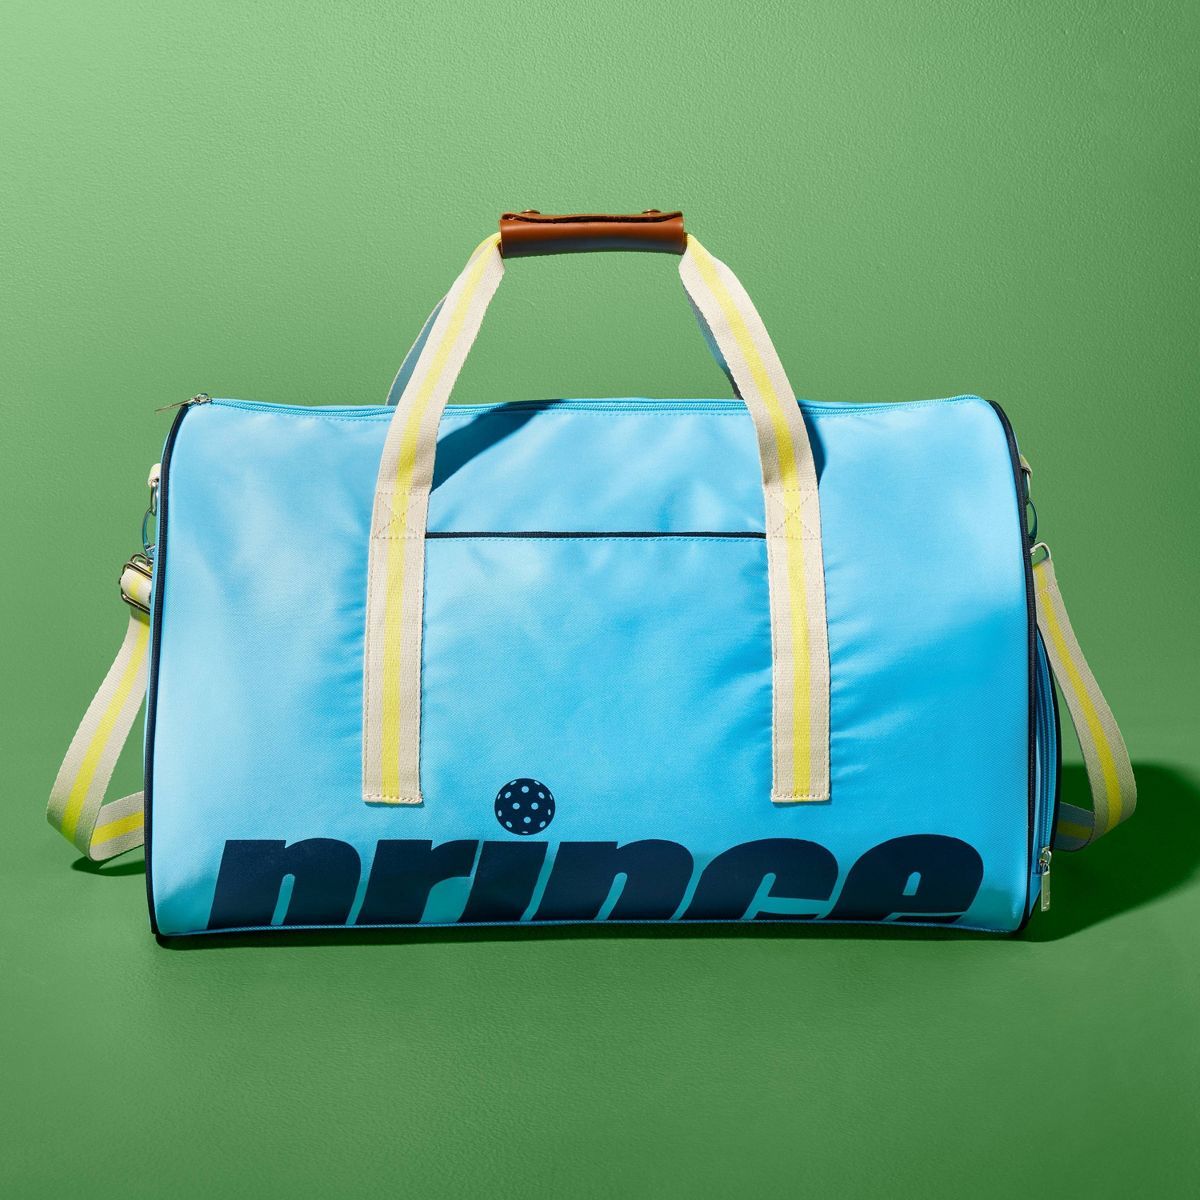 Prince Duffel Sports Equipment Bag - Blue | Target